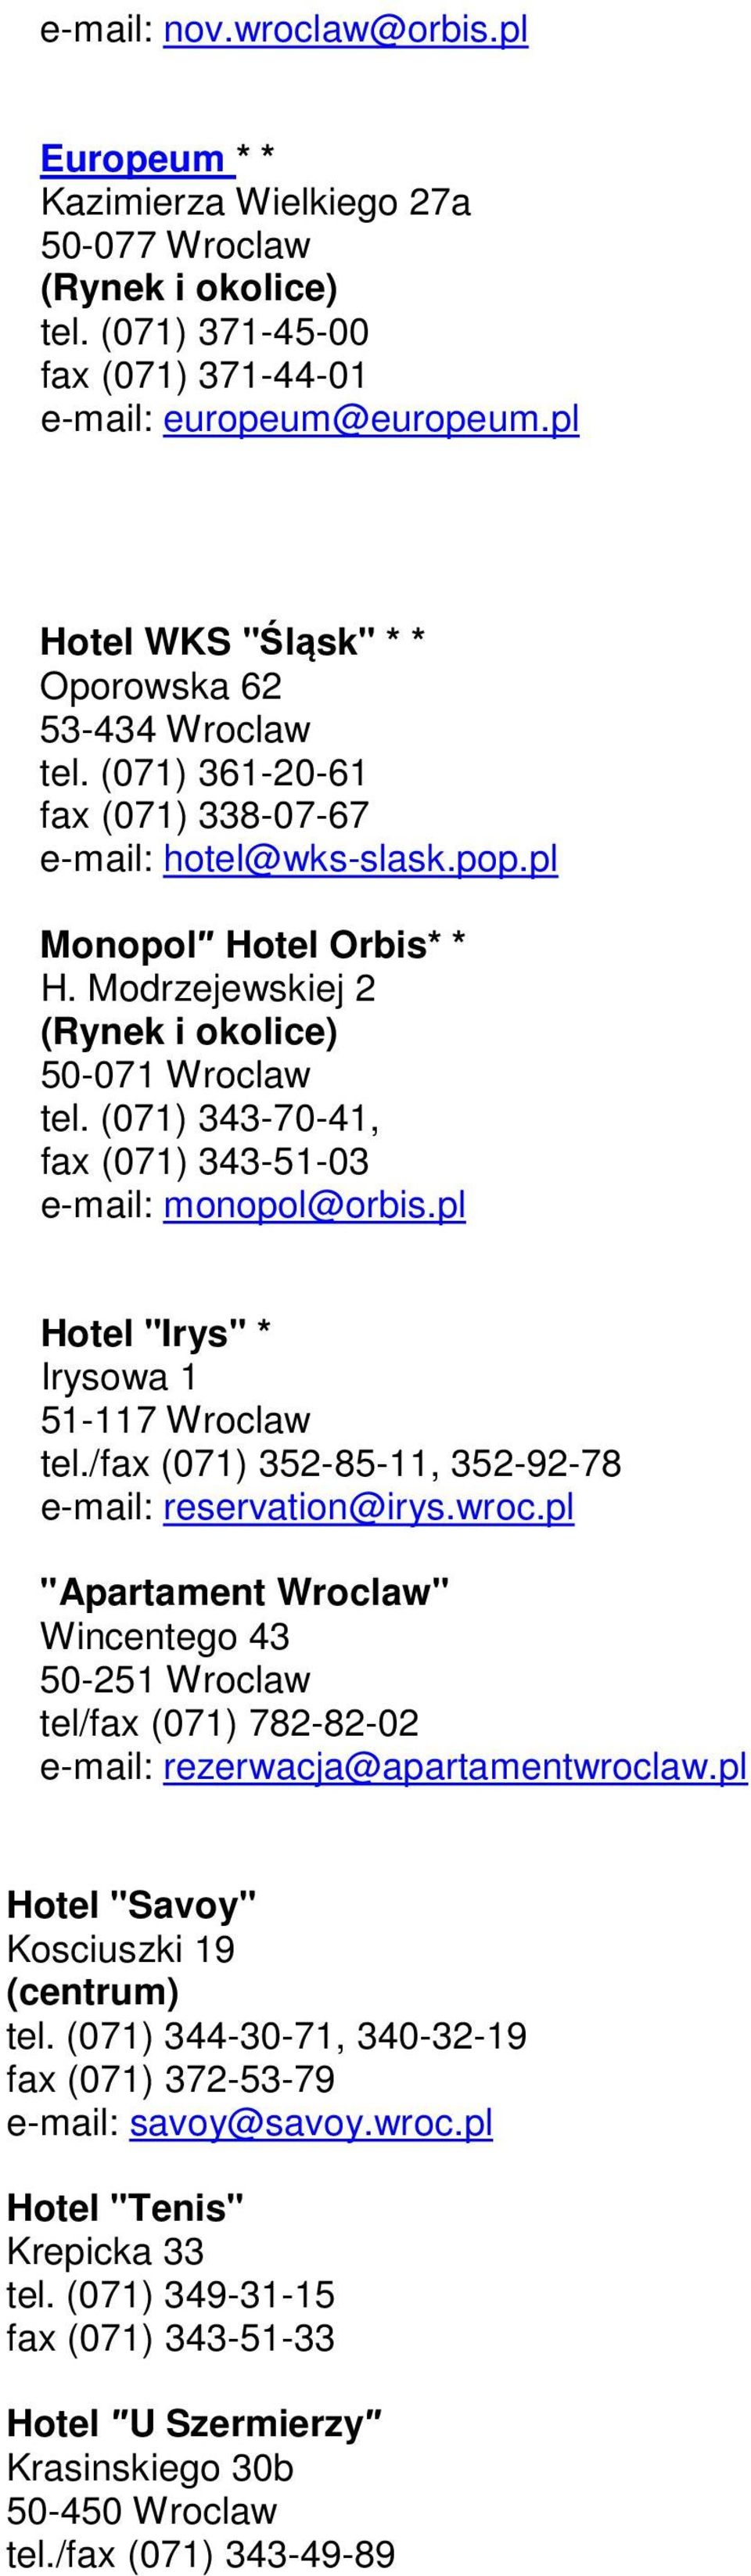 (071) 343-70-41, fax (071) 343-51-03 e-mail: monopol@orbis.pl Hotel "Irys" * Irysowa 1 51-117 Wroclaw tel./fax (071) 352-85-11, 352-92-78 e-mail: reservation@irys.wroc.